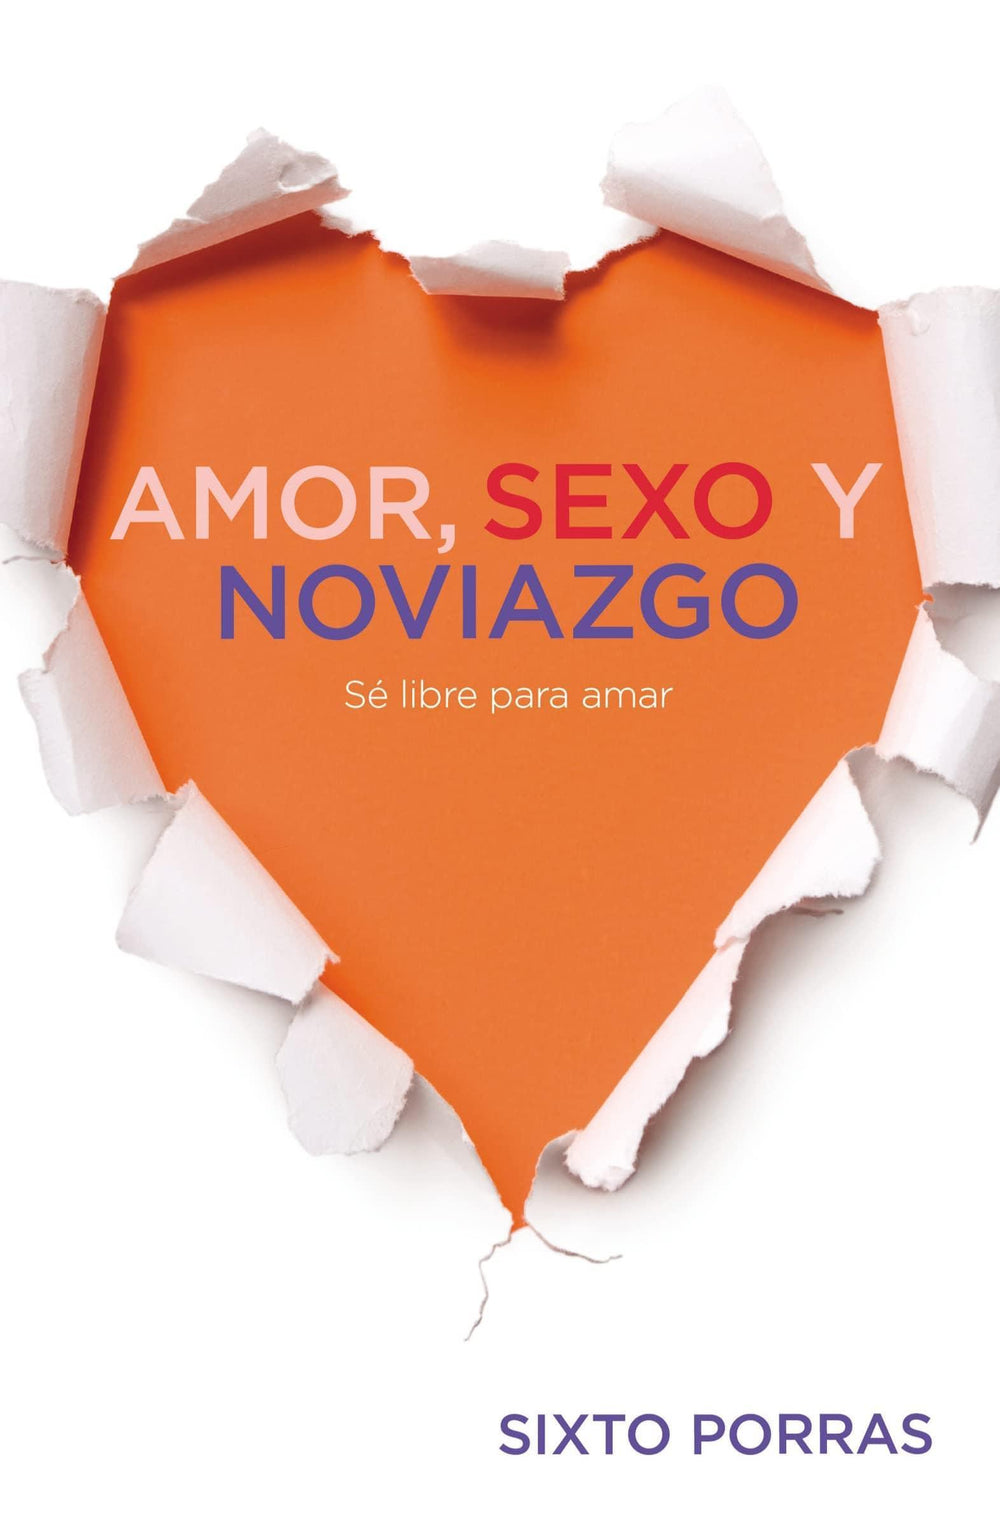 Amor, sexo y noviazgo-Sixto Porras - Pura Vida Books